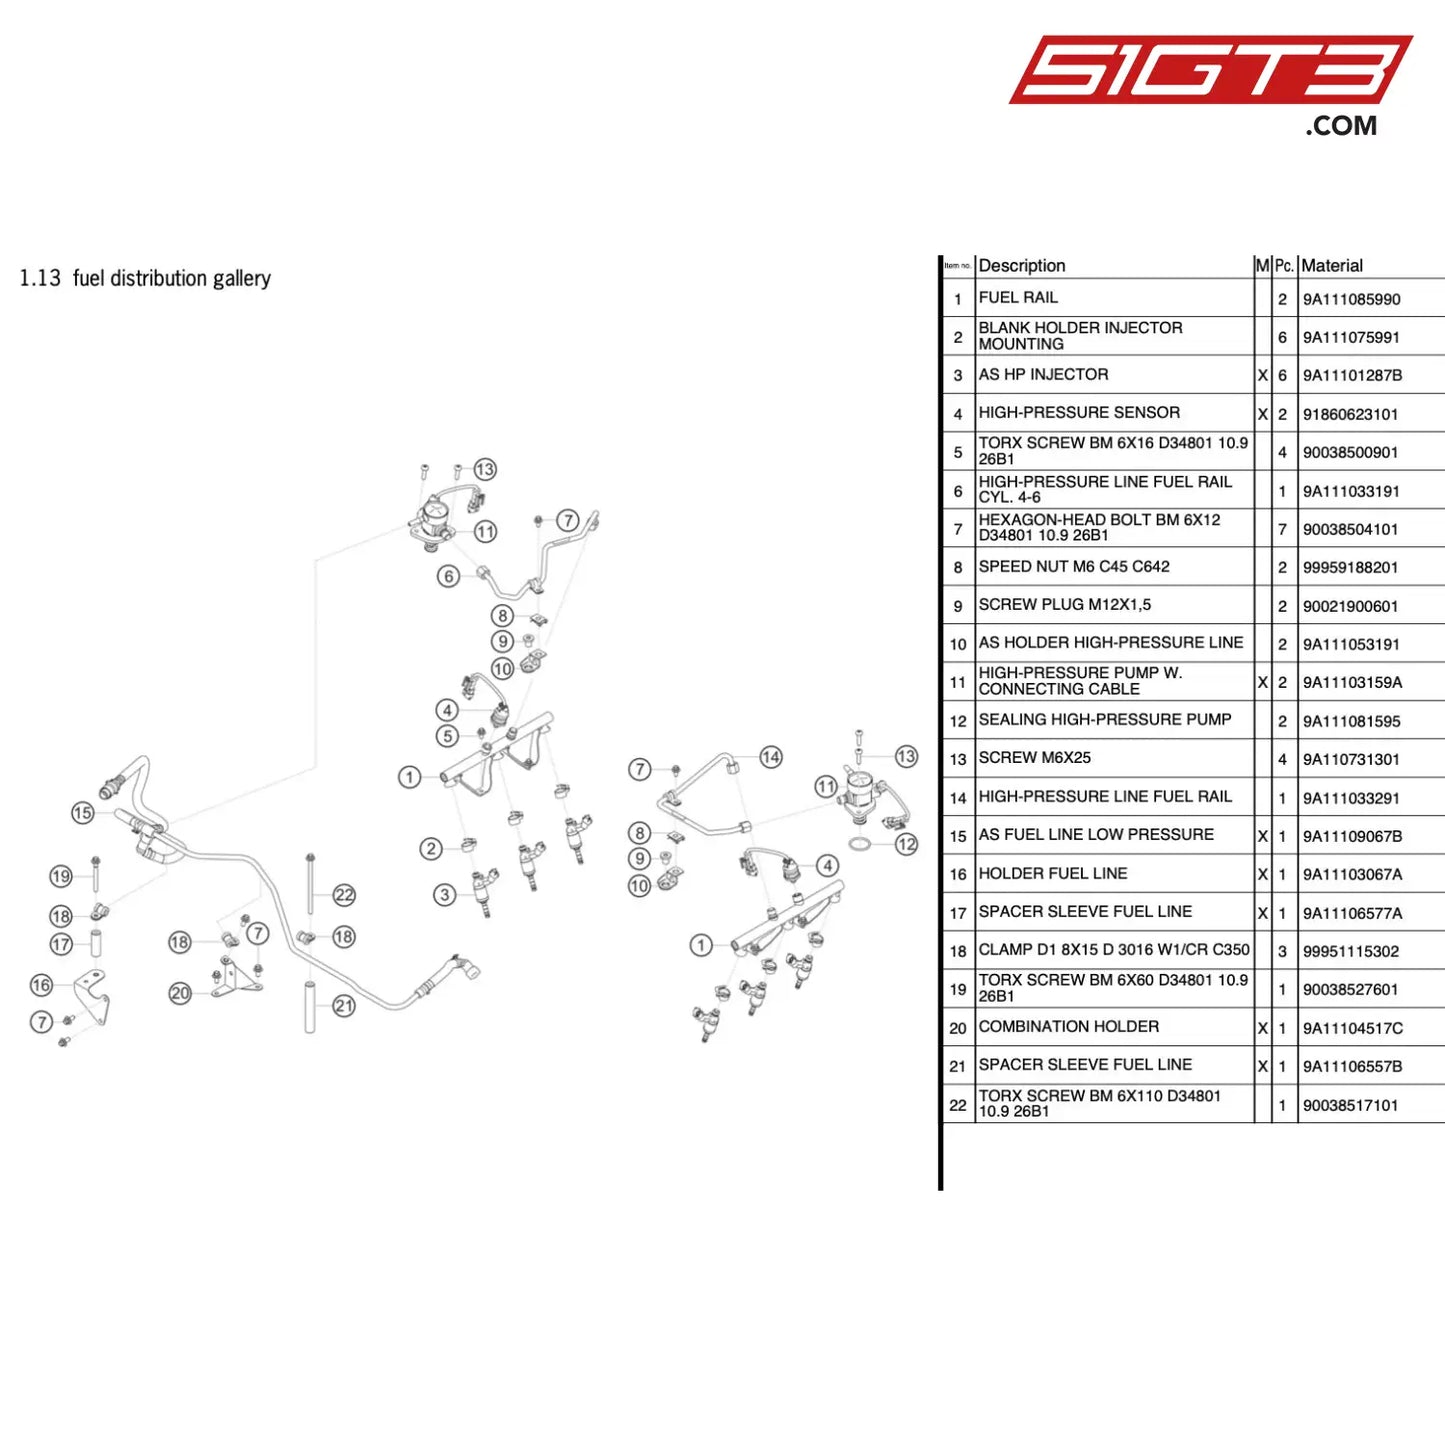 Holder Fuel Line - 9A11103067A [Porsche 911 Gt3 R Type 991 (Gen 1)] Fuel Distribution Gallery